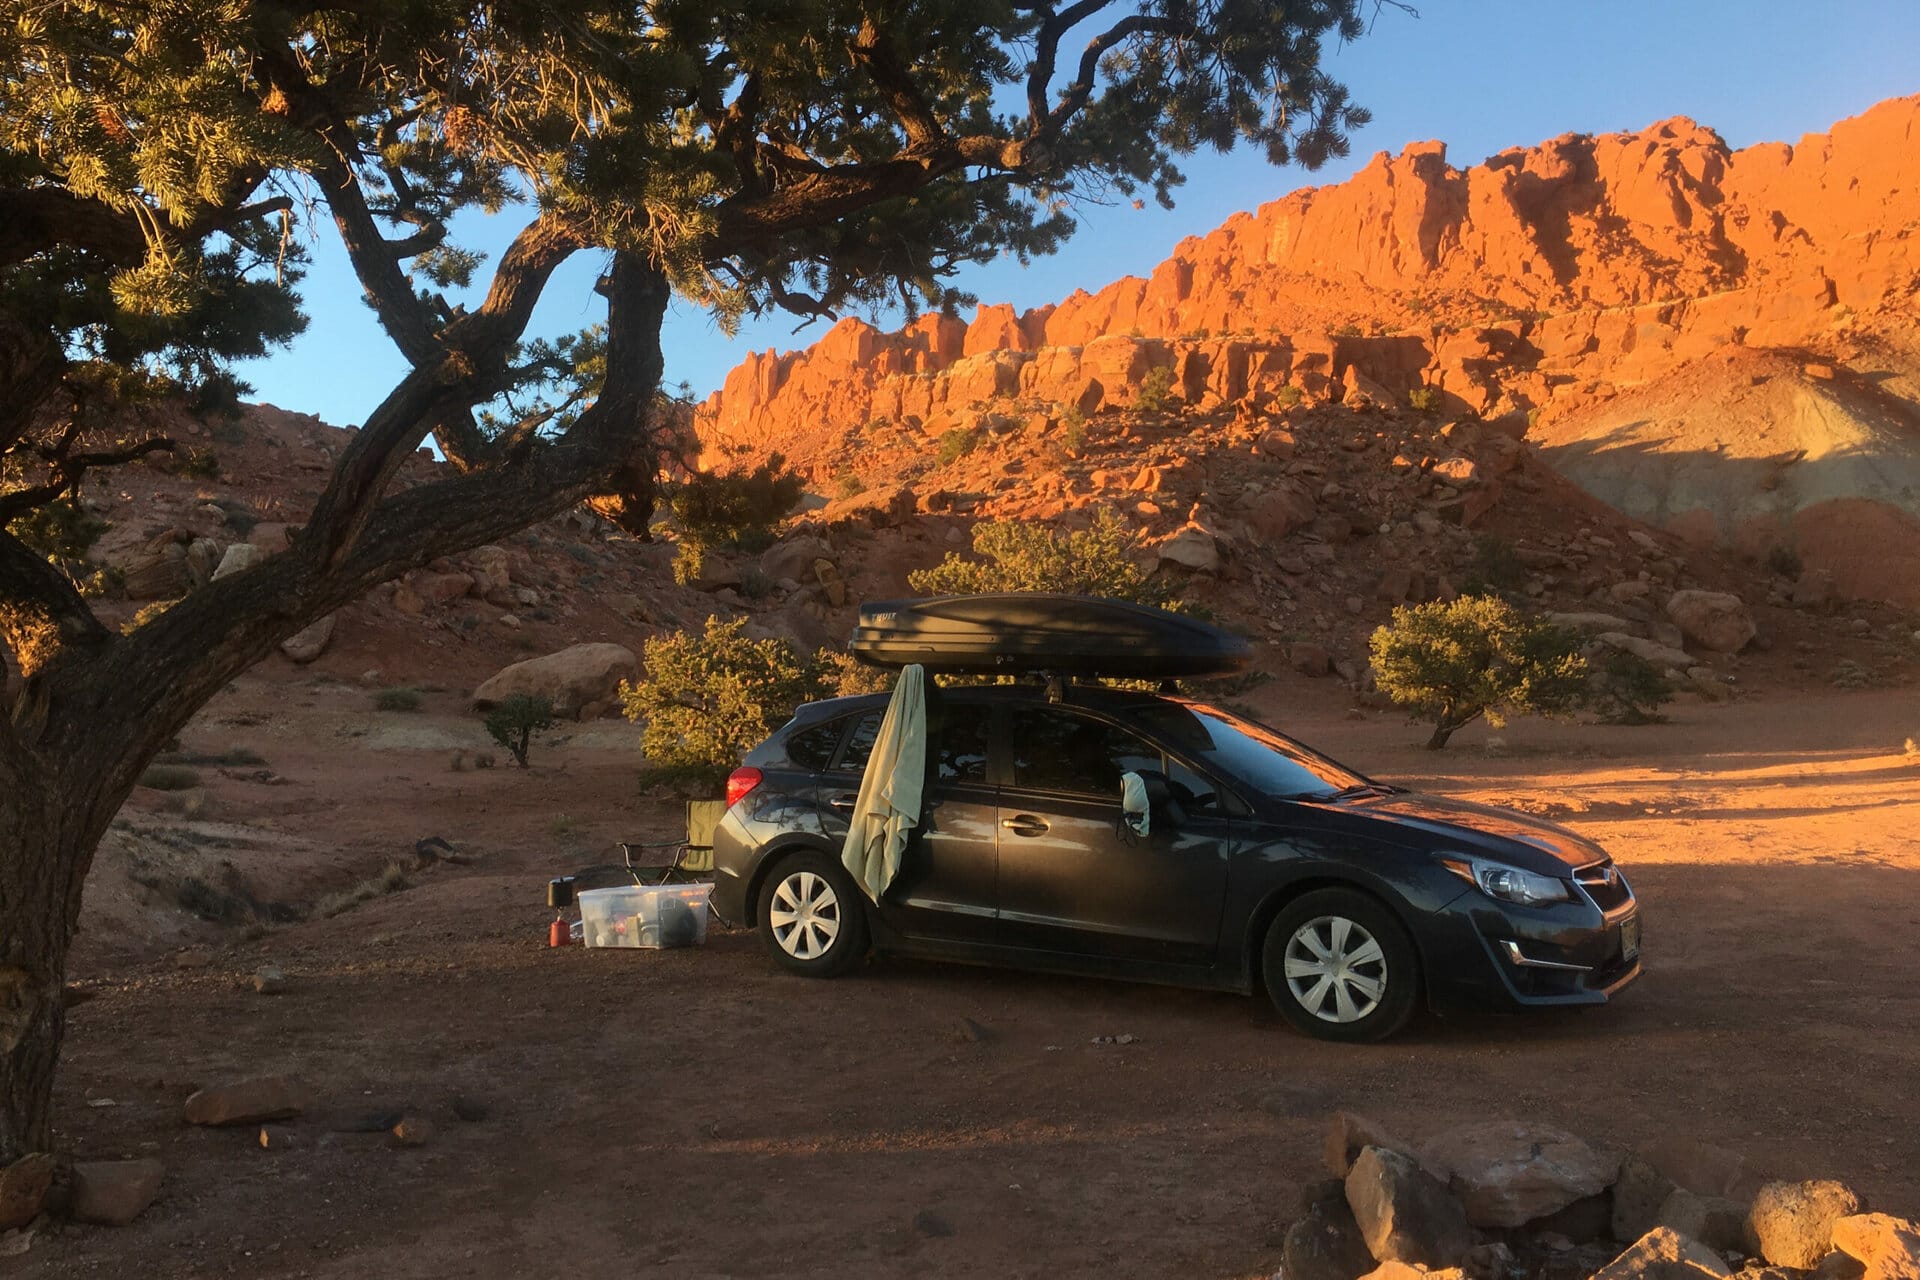 https://roadtrippers.com/wp-content/uploads/2022/06/car-camping-1-scaled.jpg